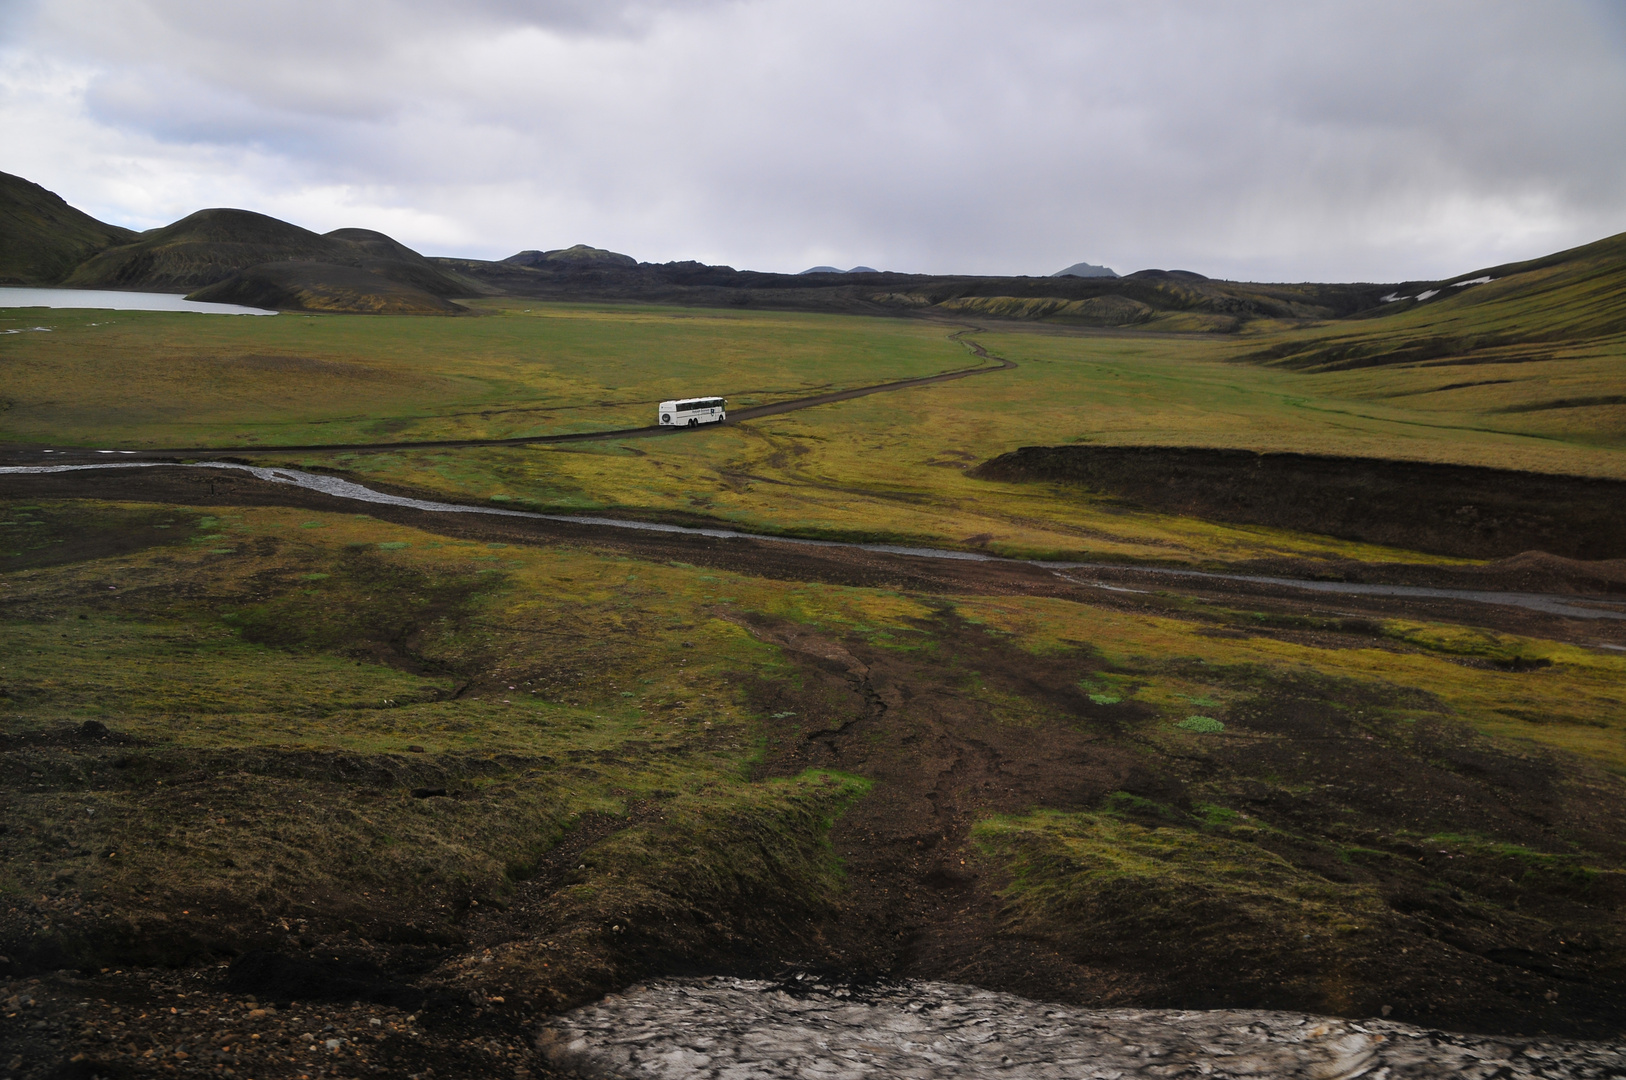 Bustour im Hochland Islands - auf dem Weg nach Landmannalaugar